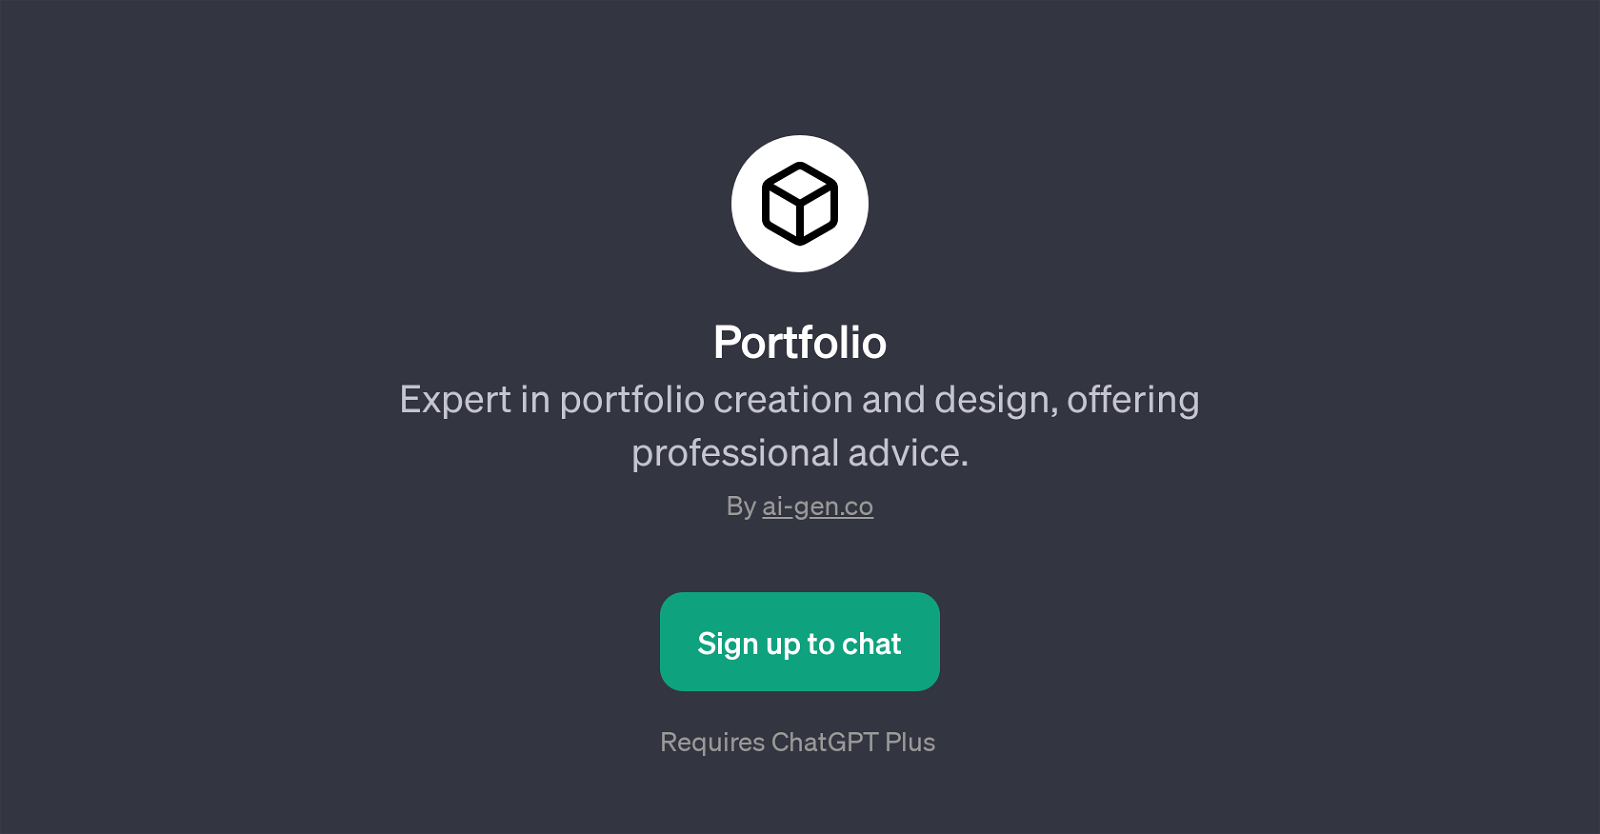 PortfolioPage website